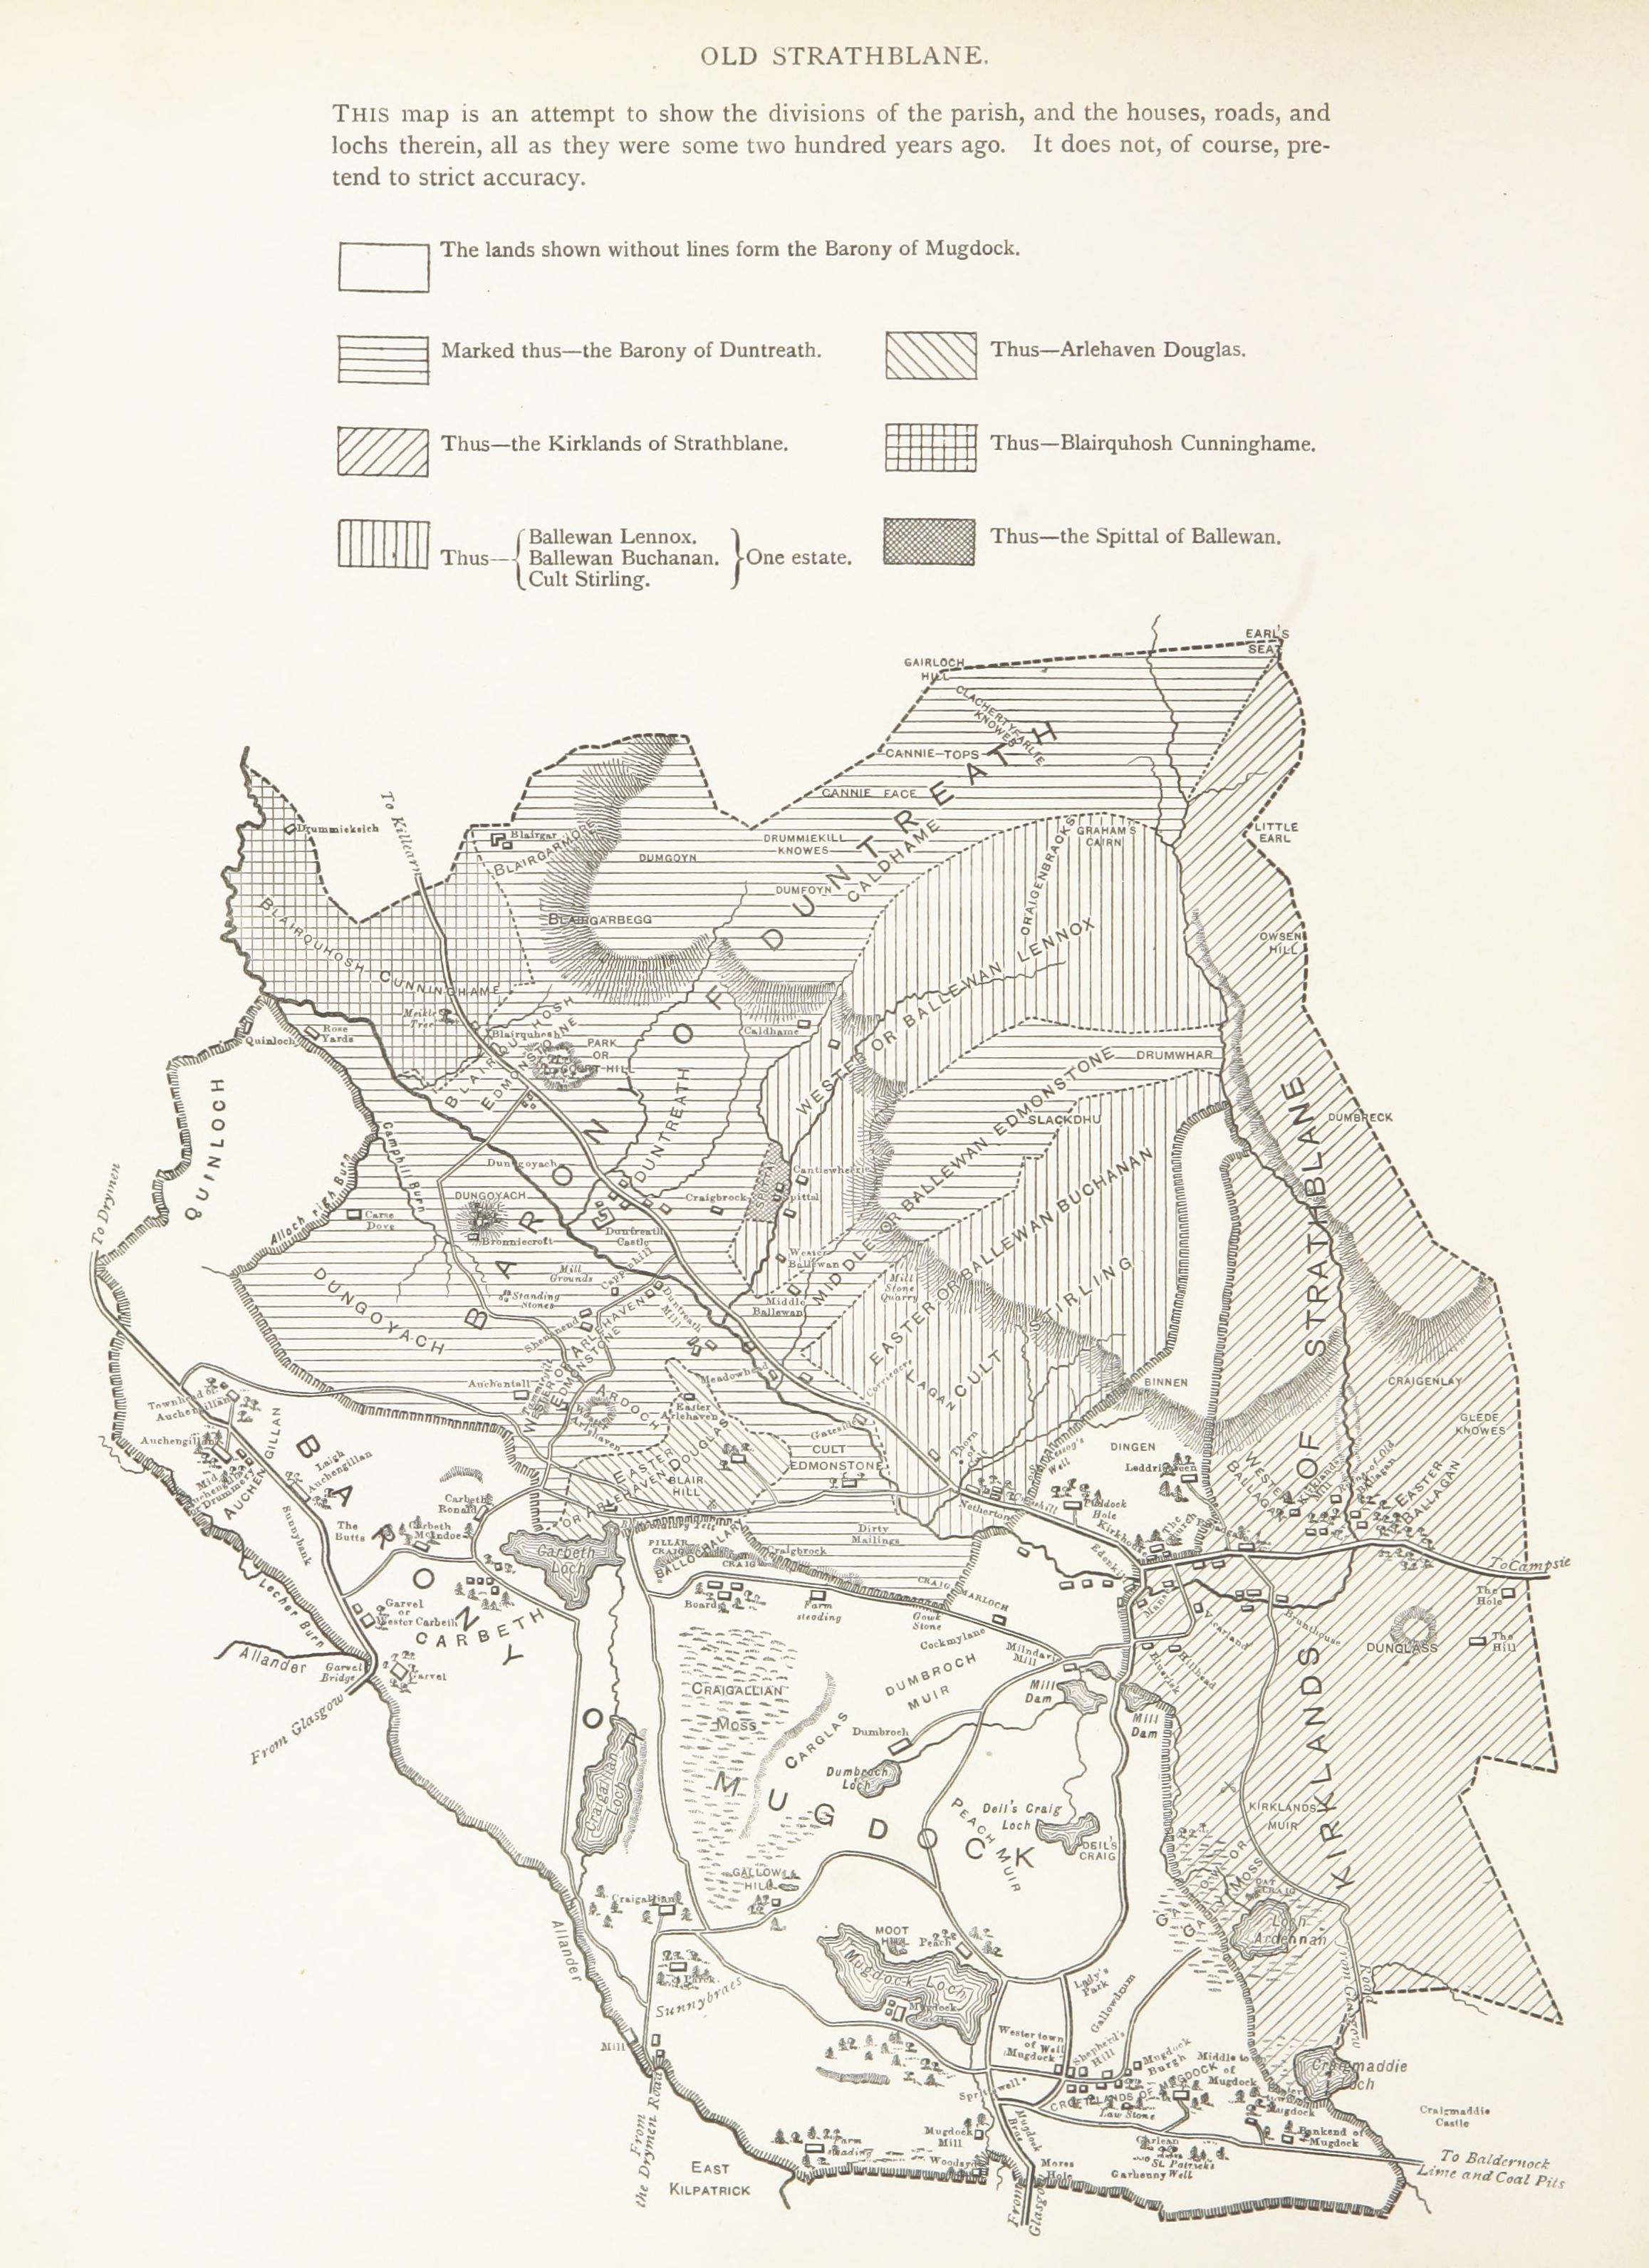 Map of Strathblane, showing Arlehaven